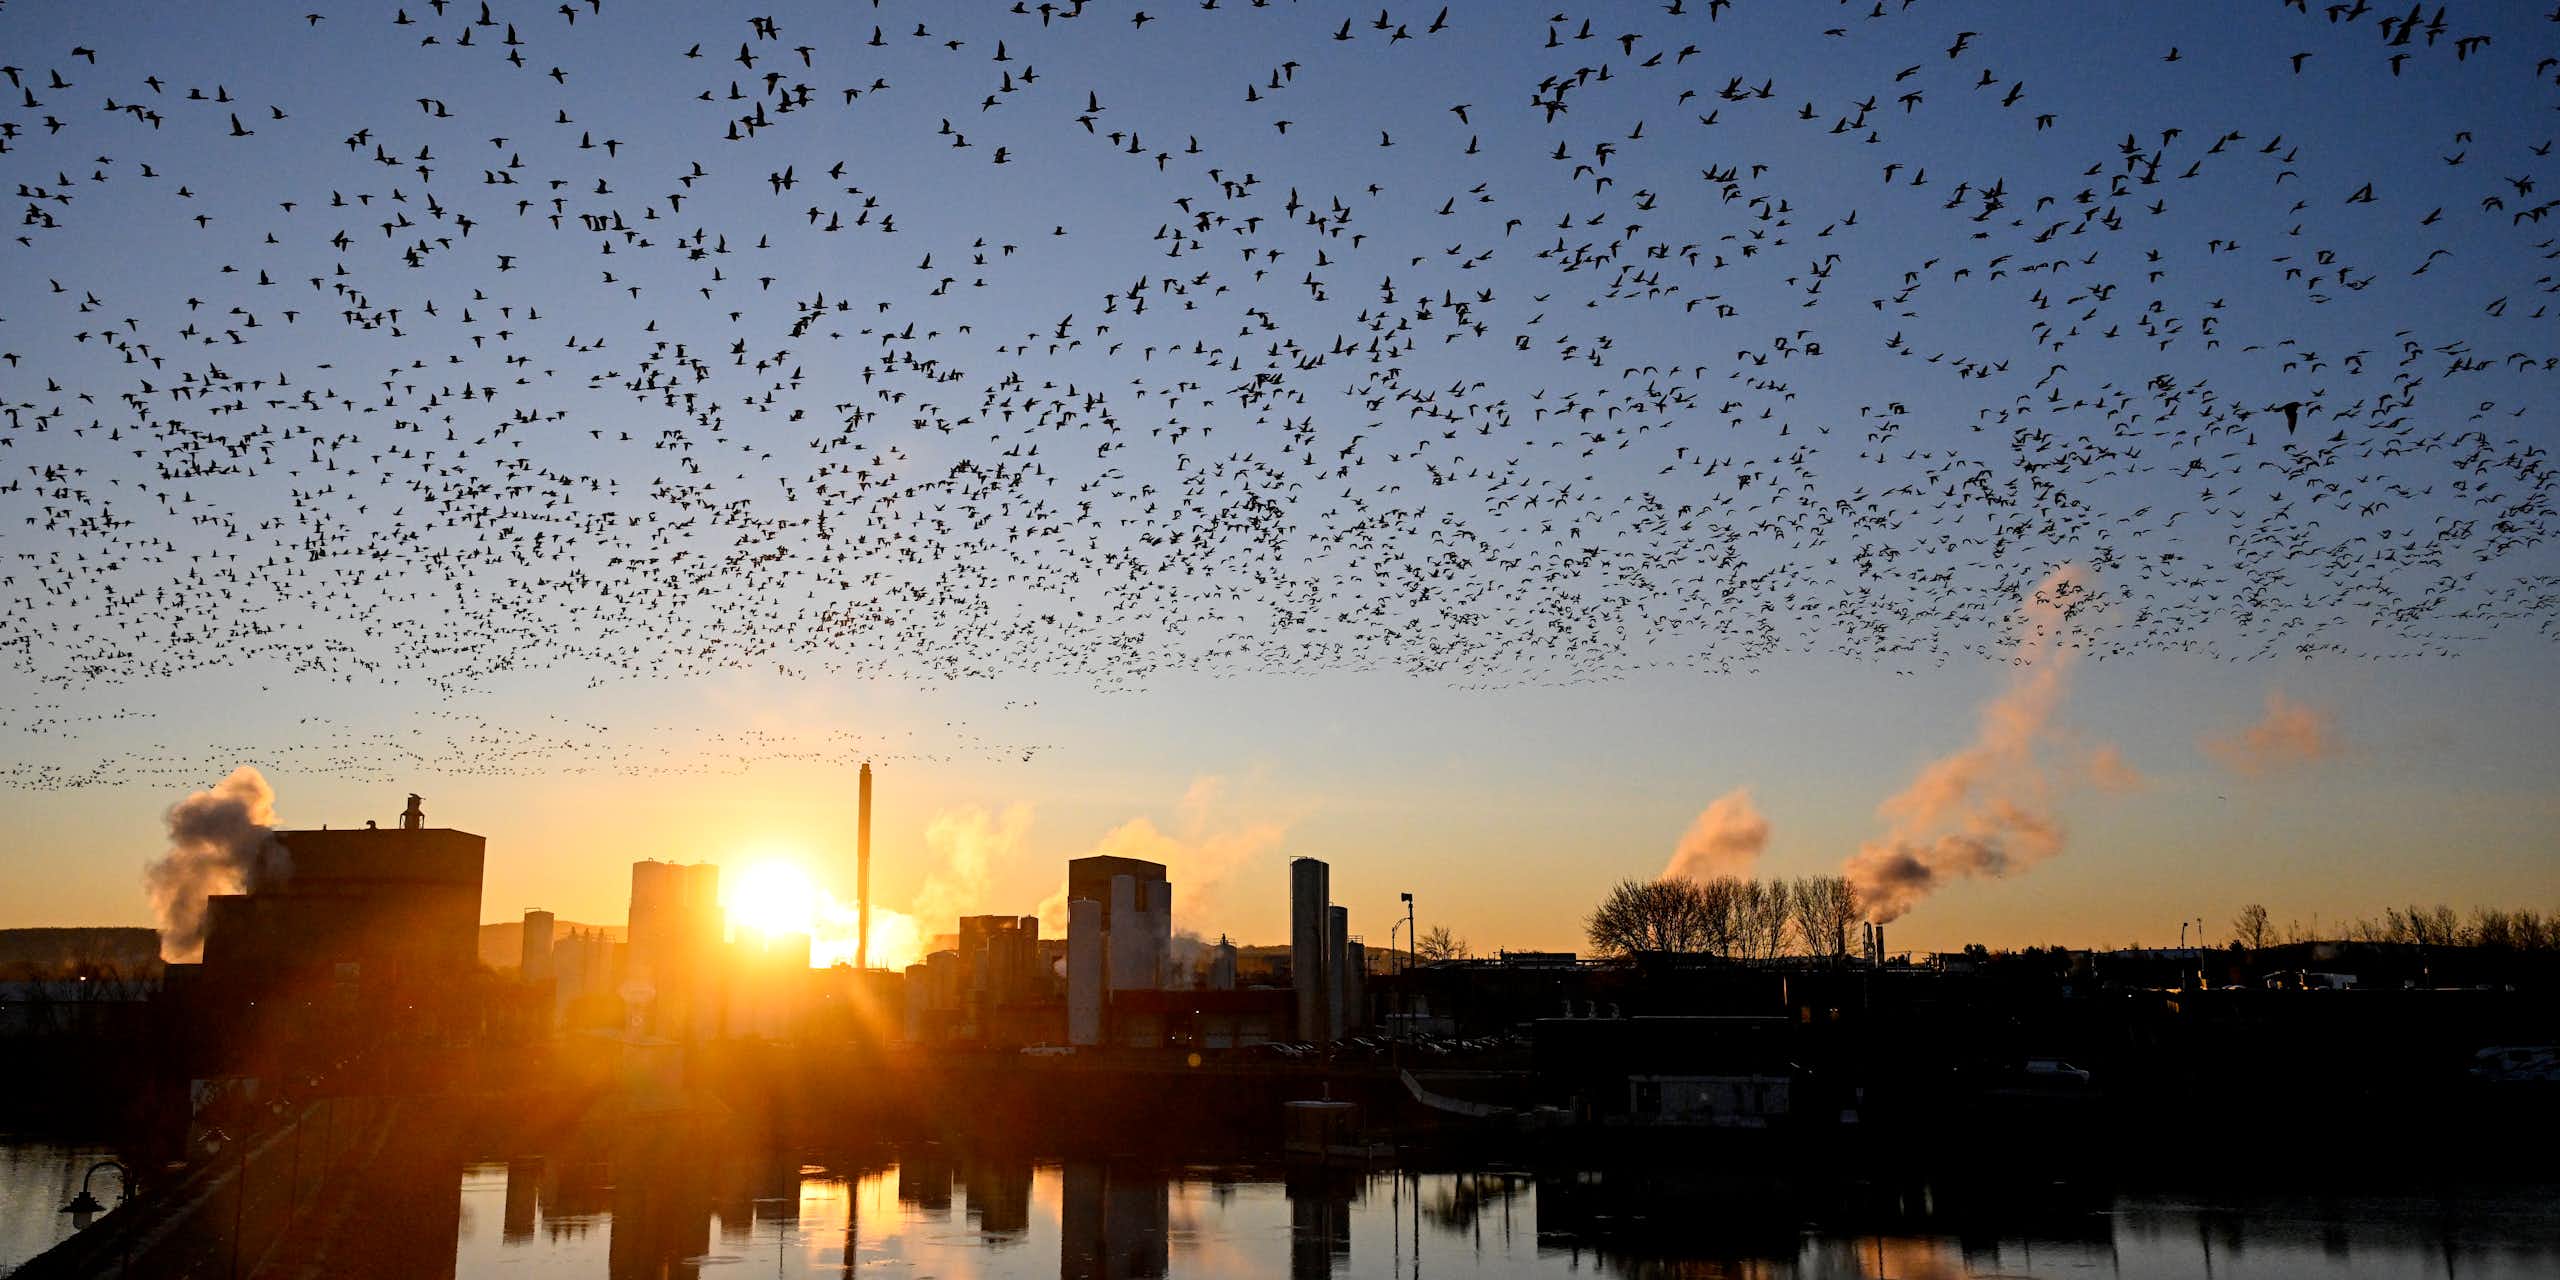 A flock of birds fly through the air against a rising sun.